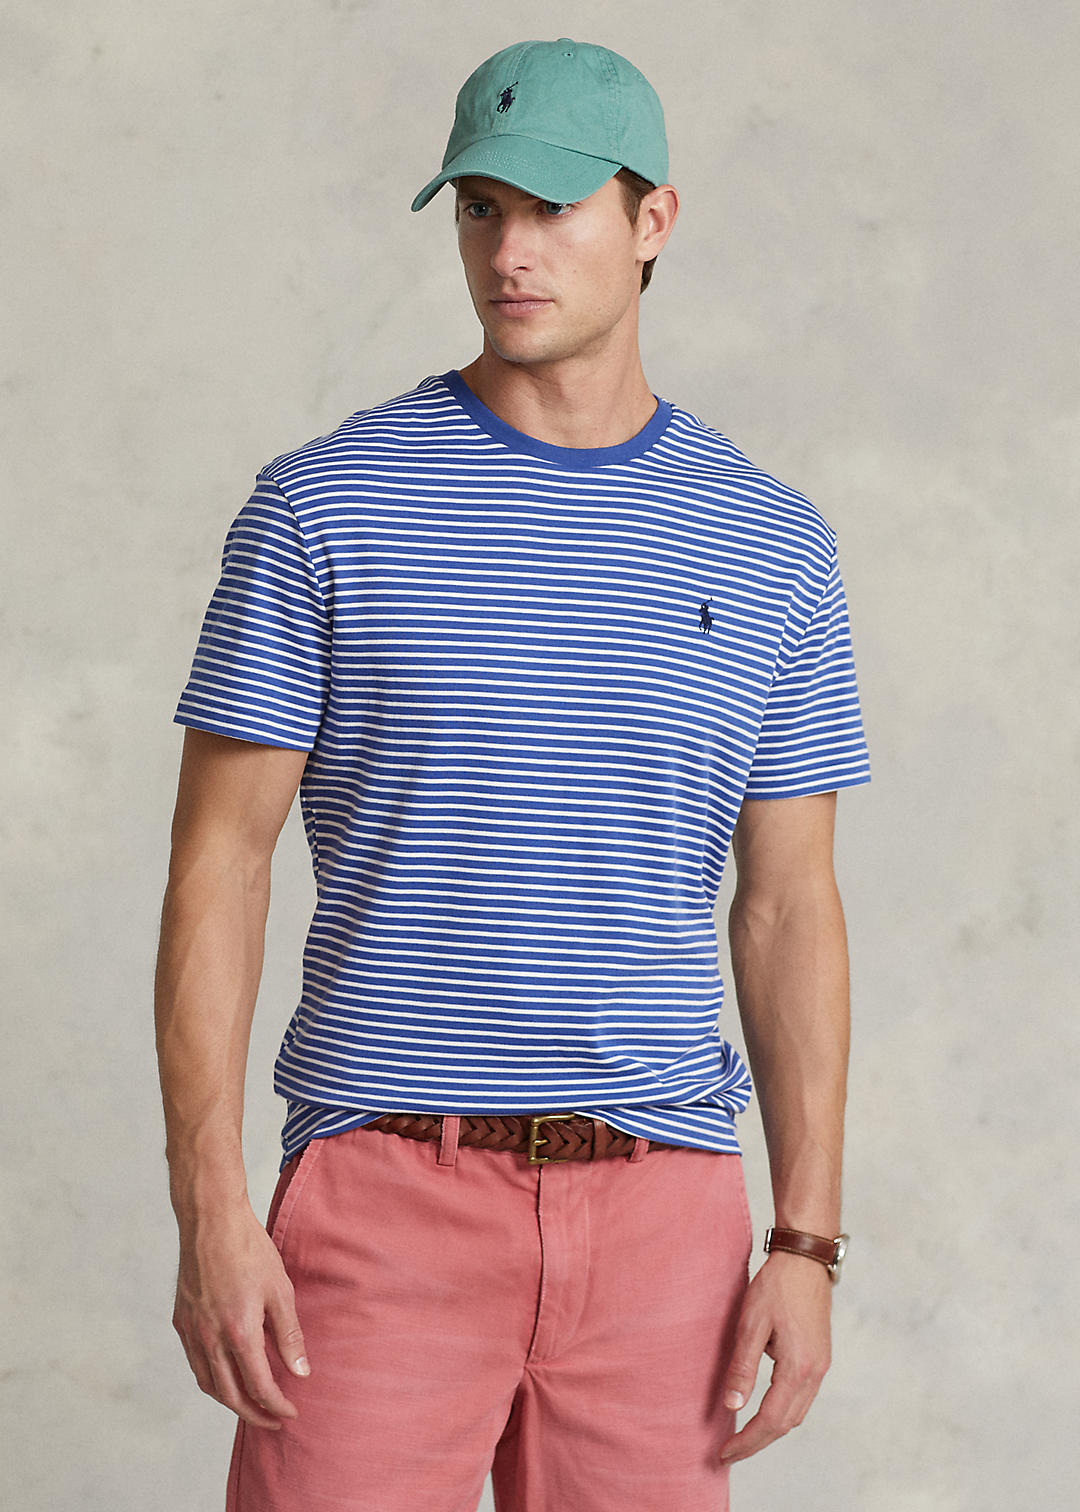 Classic Fit Striped Soft Cotton T-Shirt